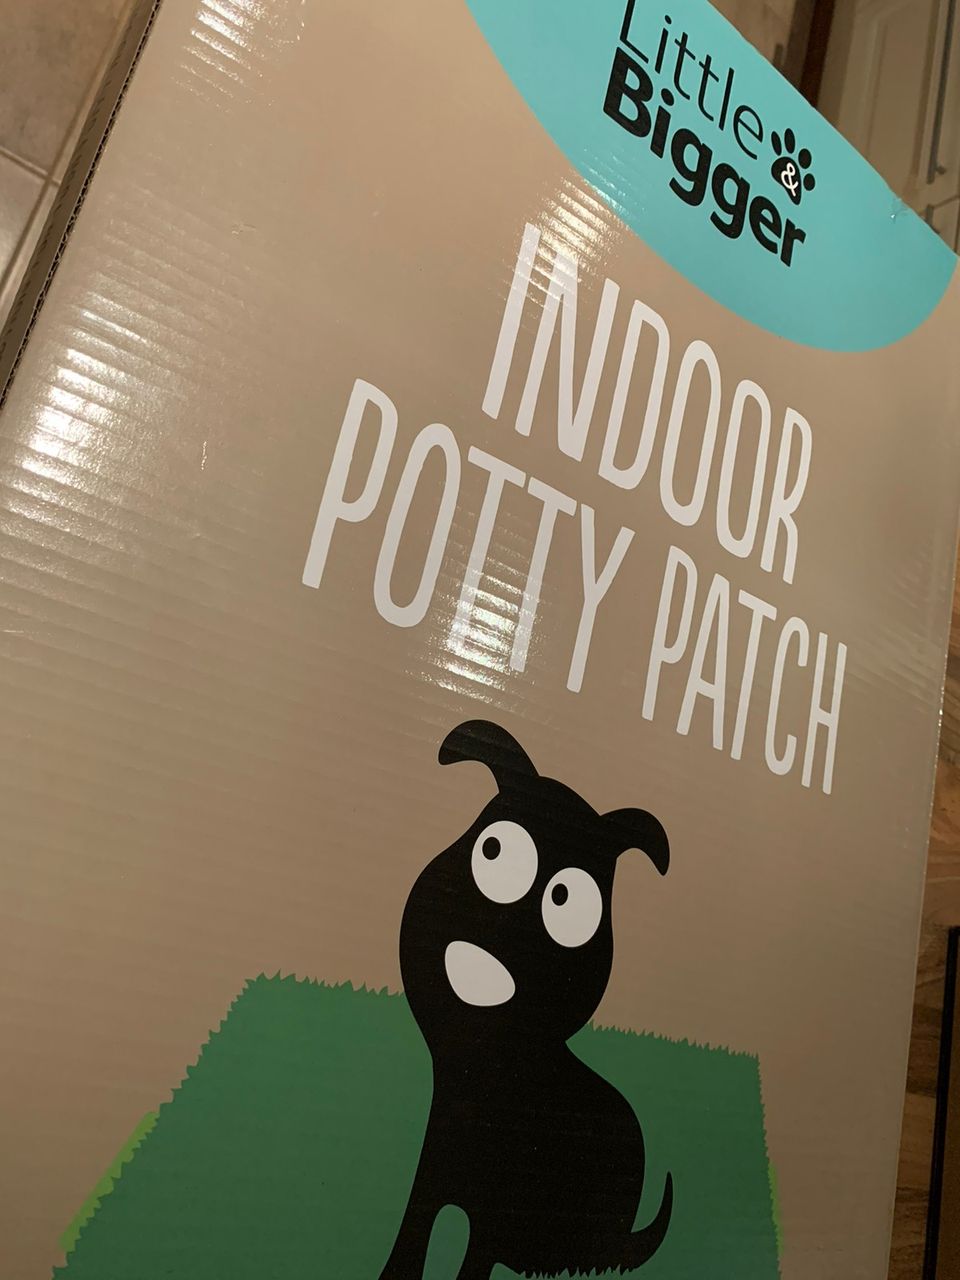 Little&Bigger Indoor Potty Patch